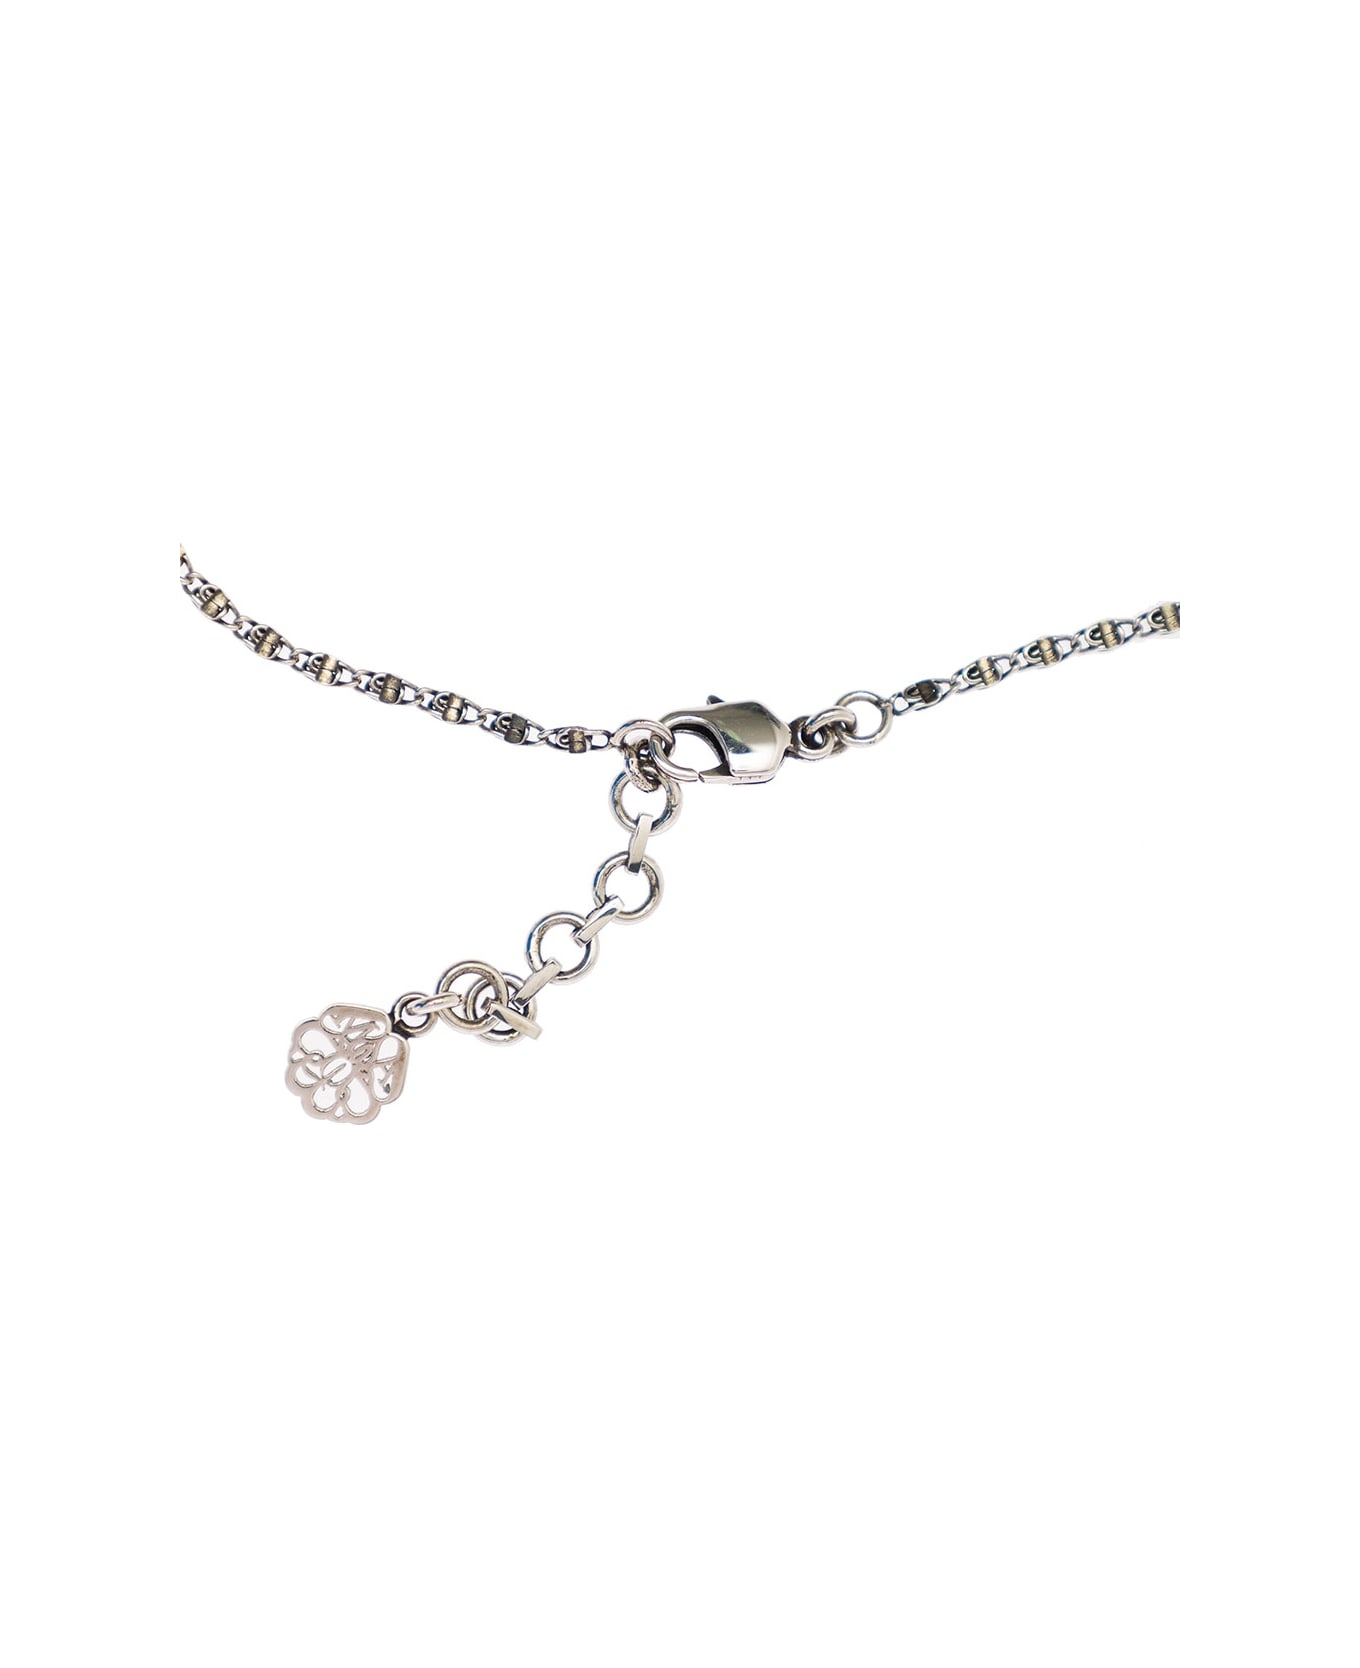 Alexander McQueen Woman's Brass Chain Necklace With Logo Pendant Detail - Metallic